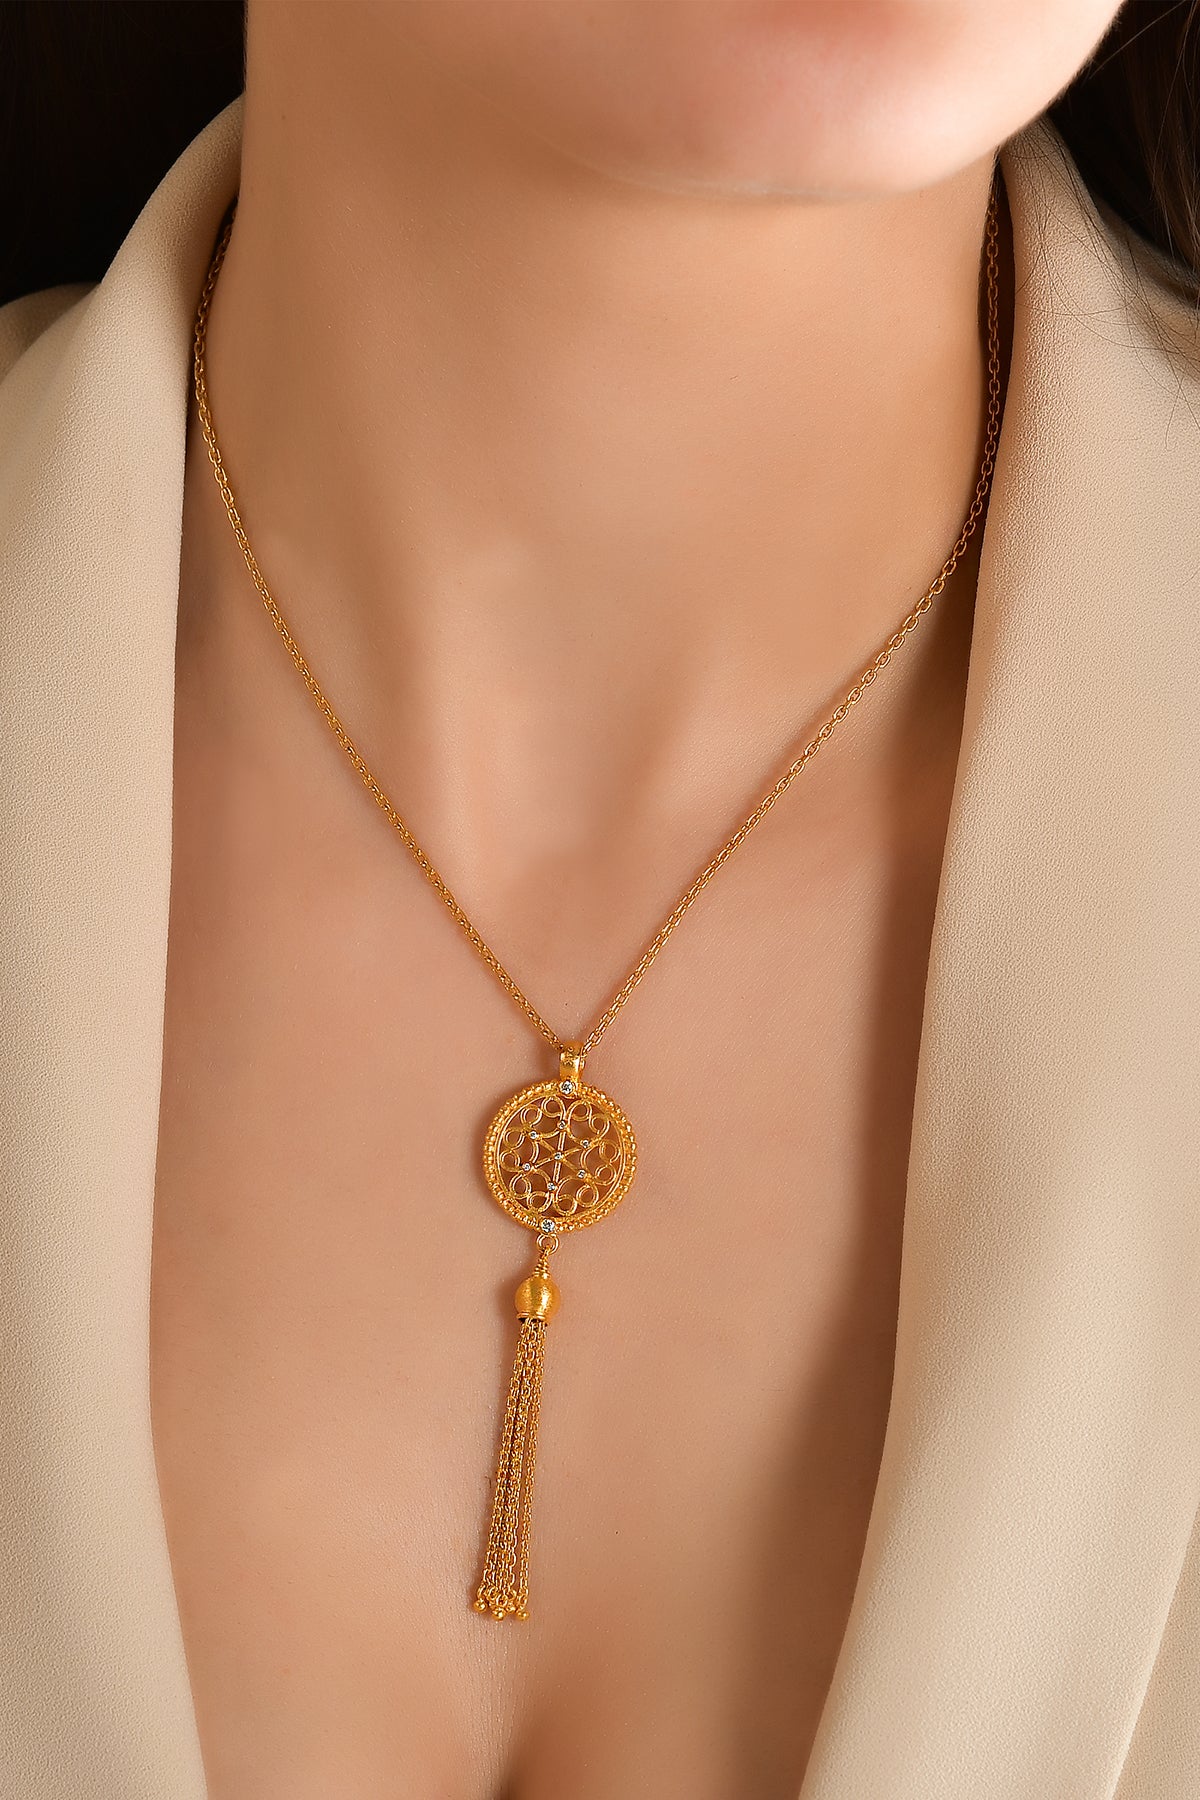 Filigree Medallion Tassel Pendant with Chain